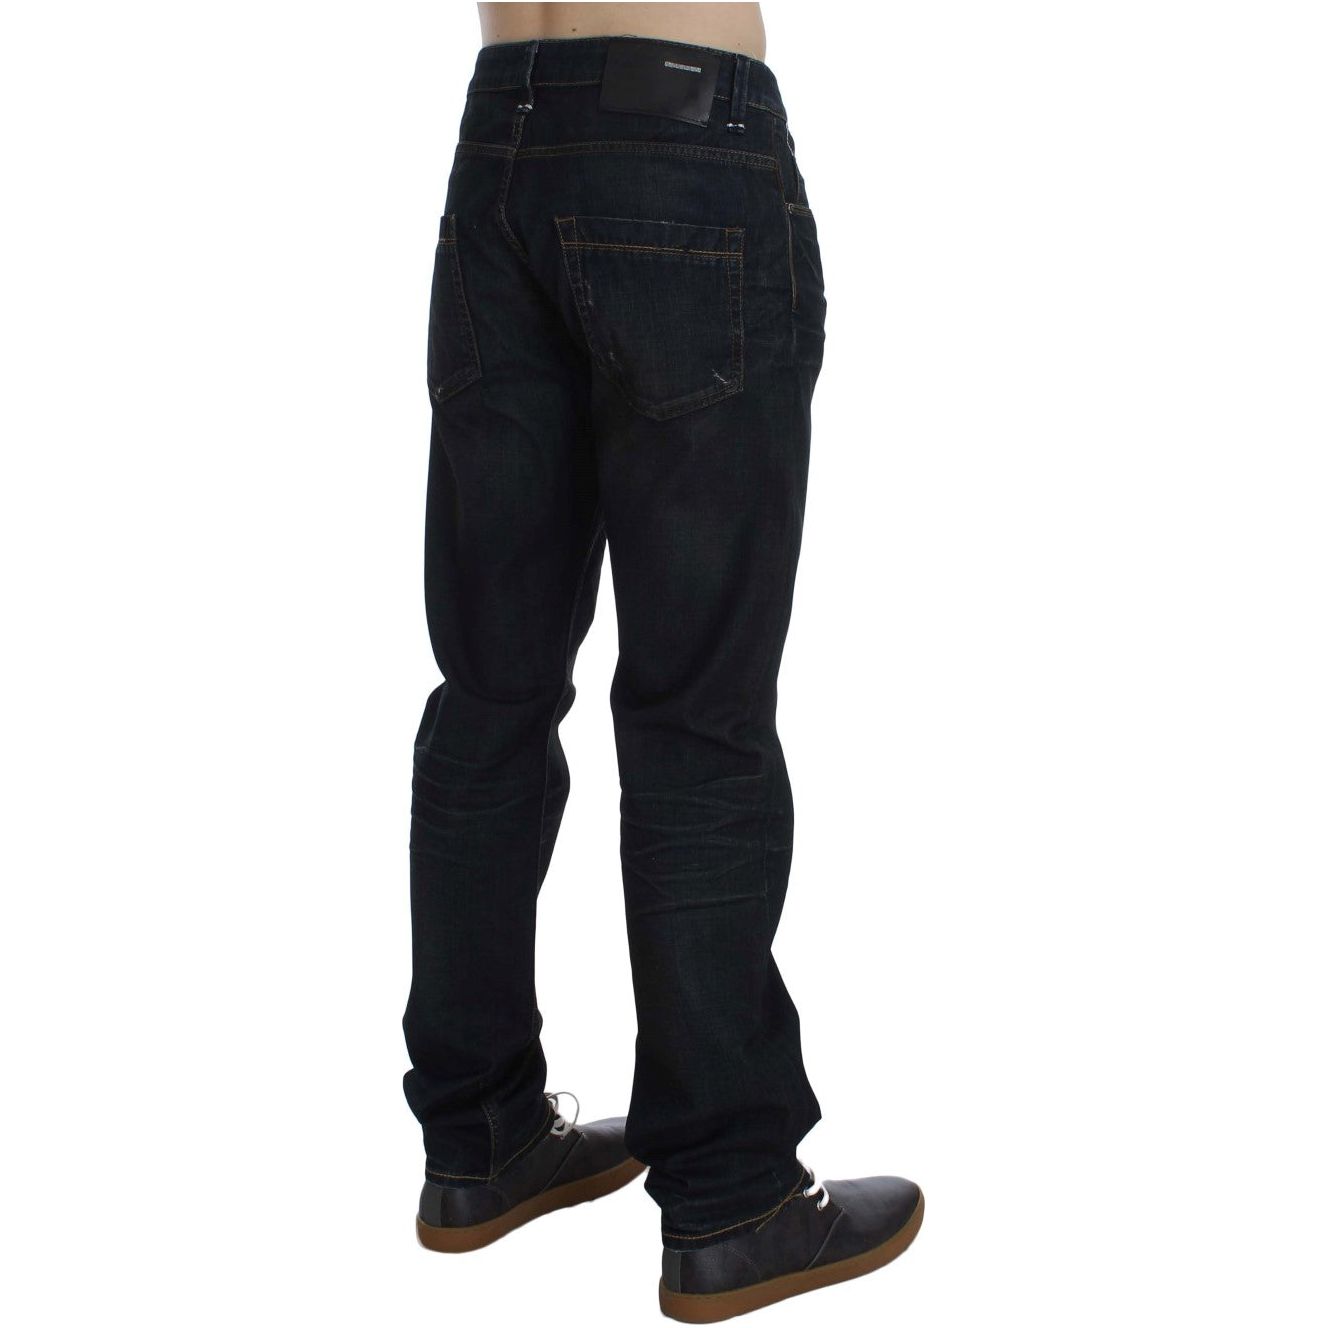 Acht Elegant Straight Fit Dark Blue Jeans blue-wash-cotton-denim-straight-fit-jeans 299245-blue-wash-cotton-denim-straight-fit-jeans.jpg